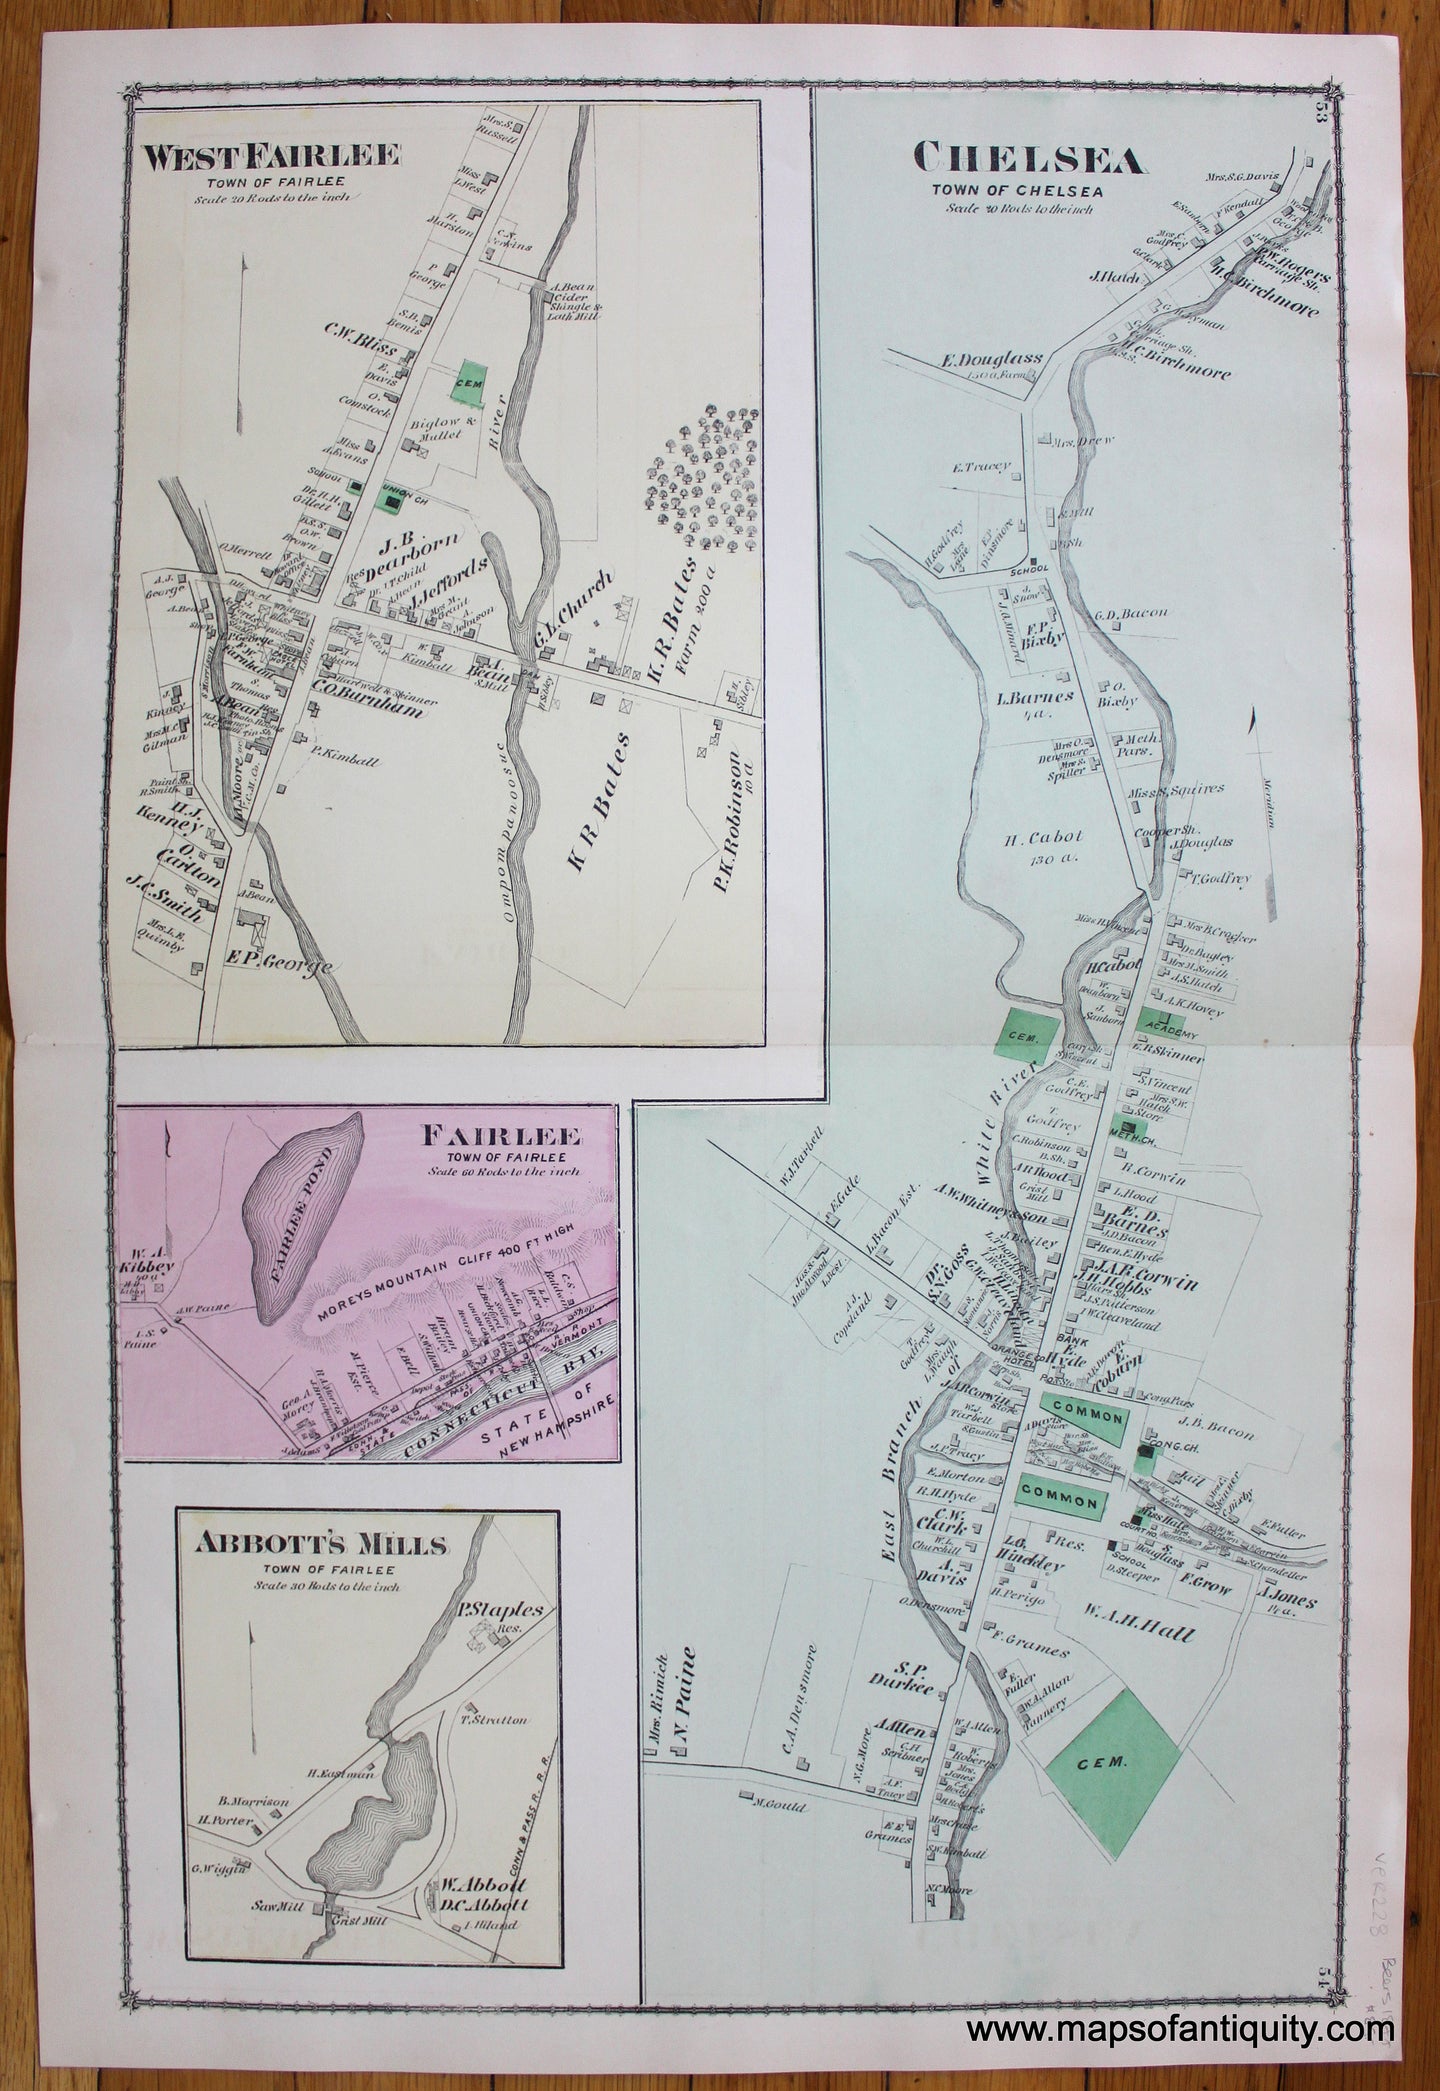 West-Fairlee-Chelsea-Fairlee-Abbot's-Mills-1877-Beers-Antique-Map-Vermont-Orange-County-1870s-1800s-19th-century-Maps-of-Antiquity